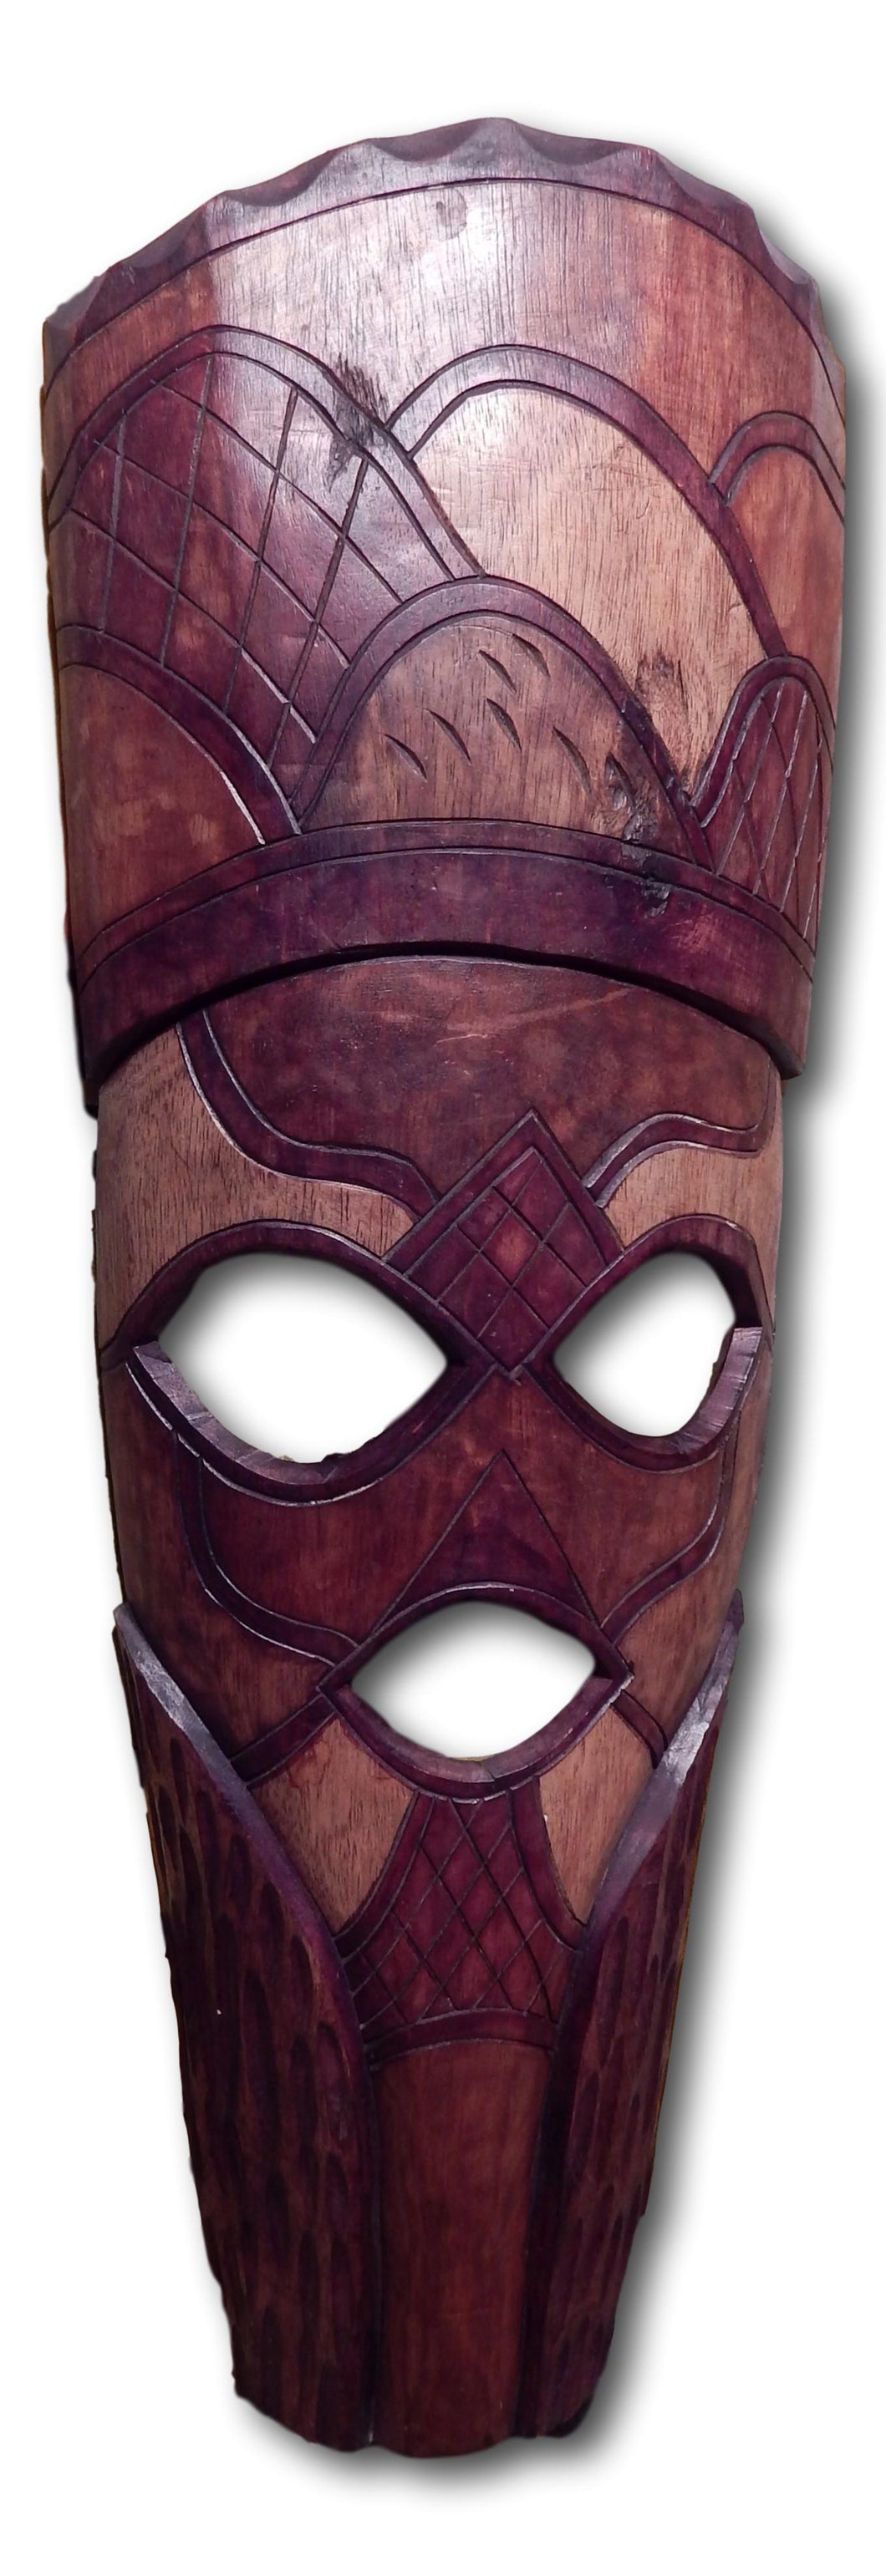 Mask art decoration handcrafted from Mukwa wood